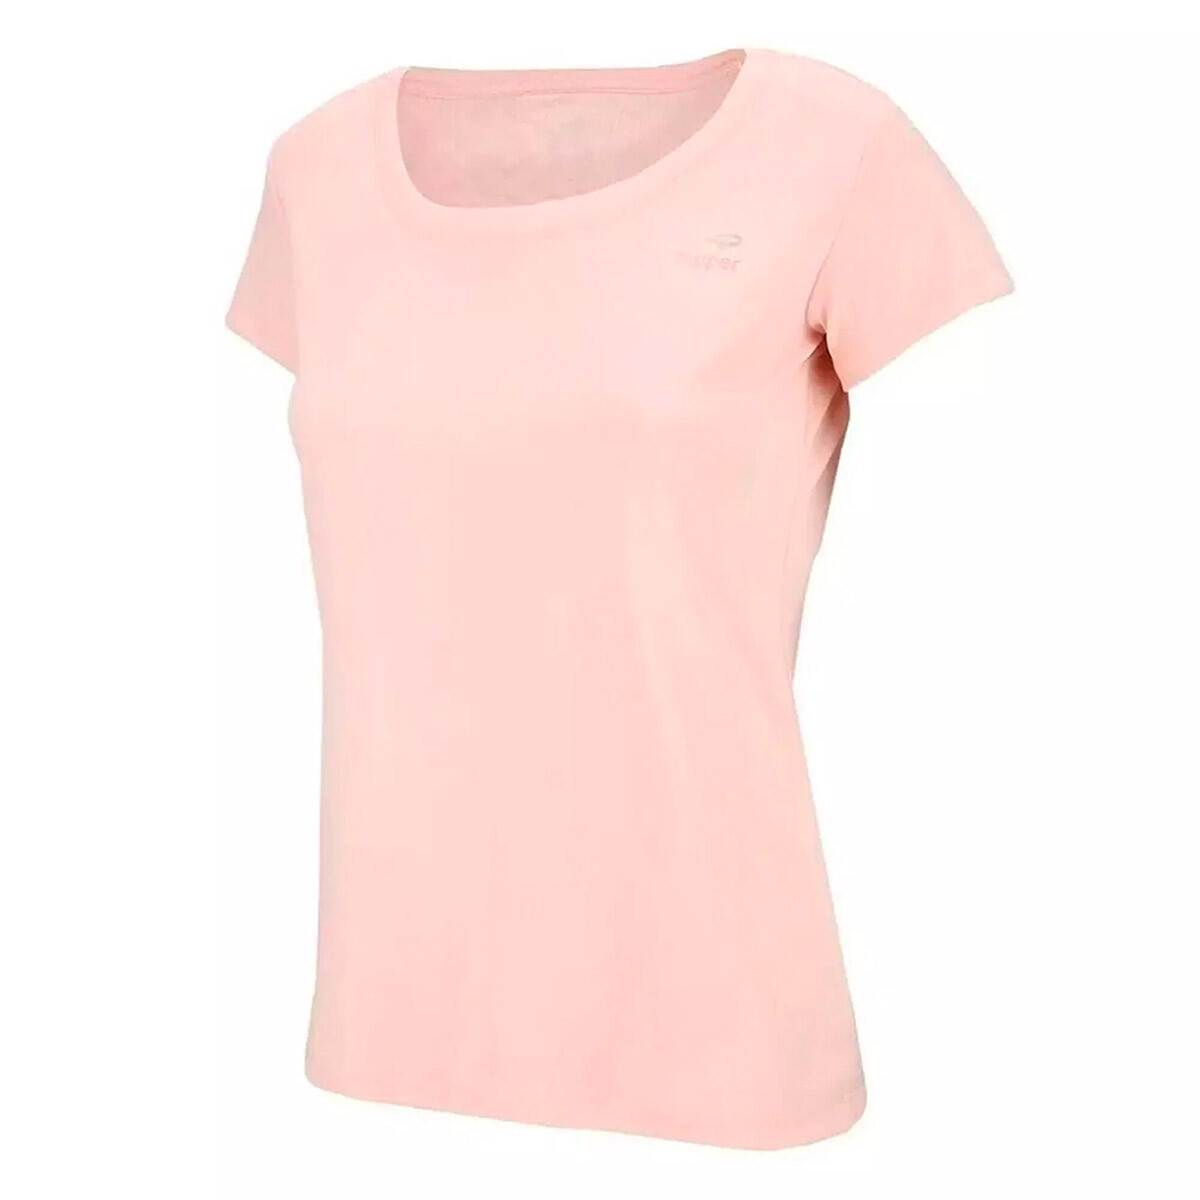 Camiseta Remera Topper Deportiva Mujer Original - Rosada 